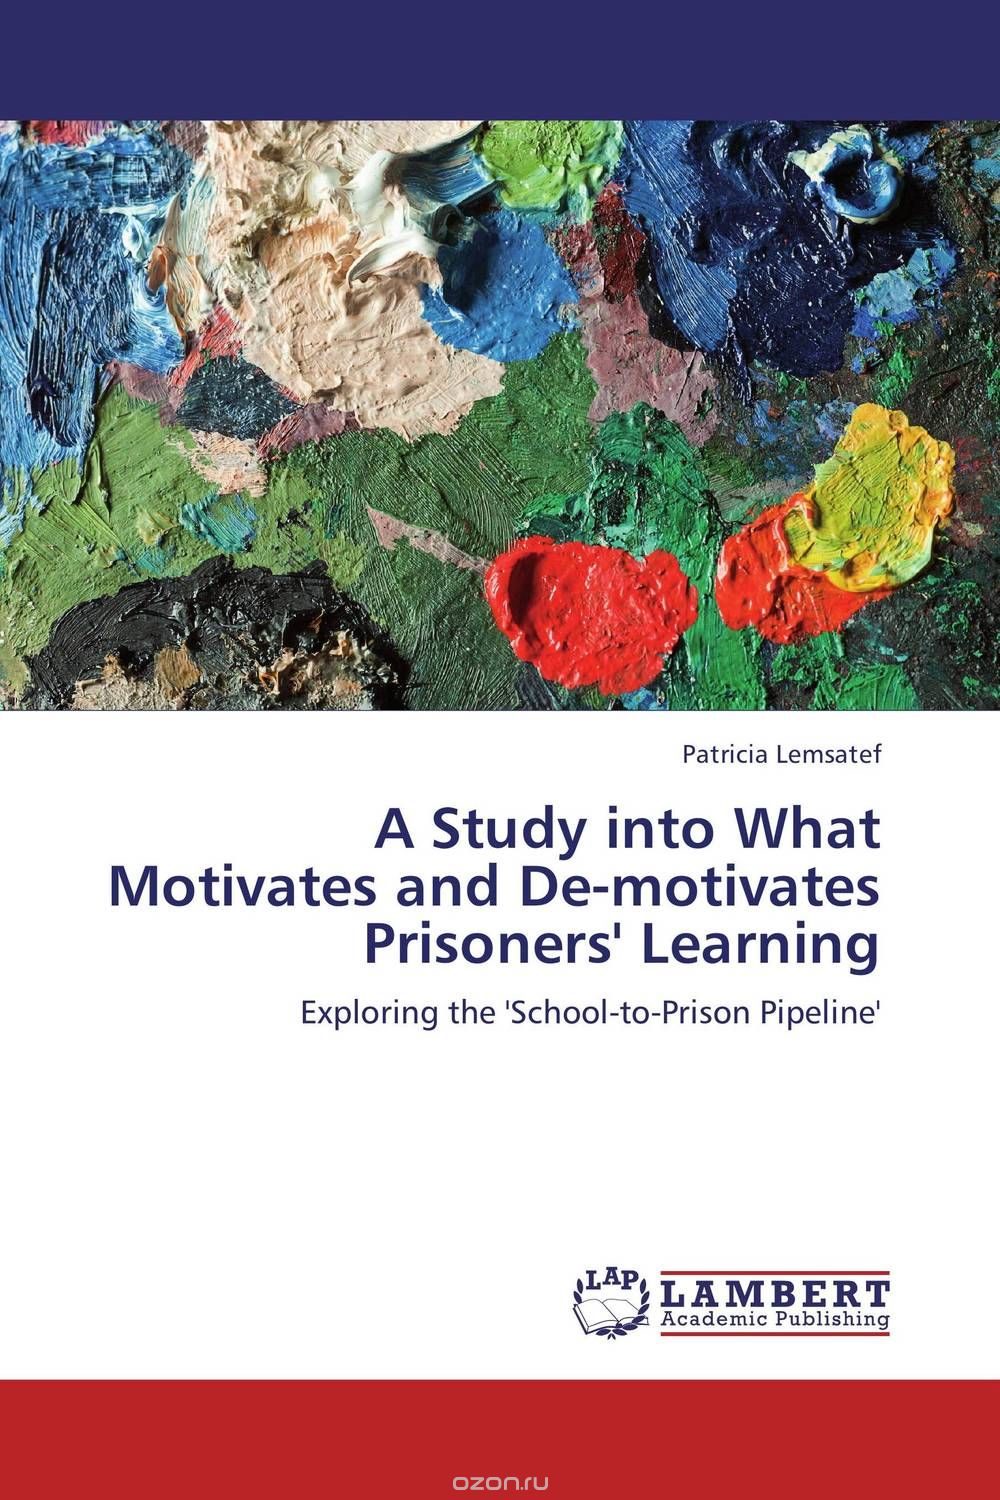 Скачать книгу "A Study into What Motivates and De-motivates Prisoners' Learning"